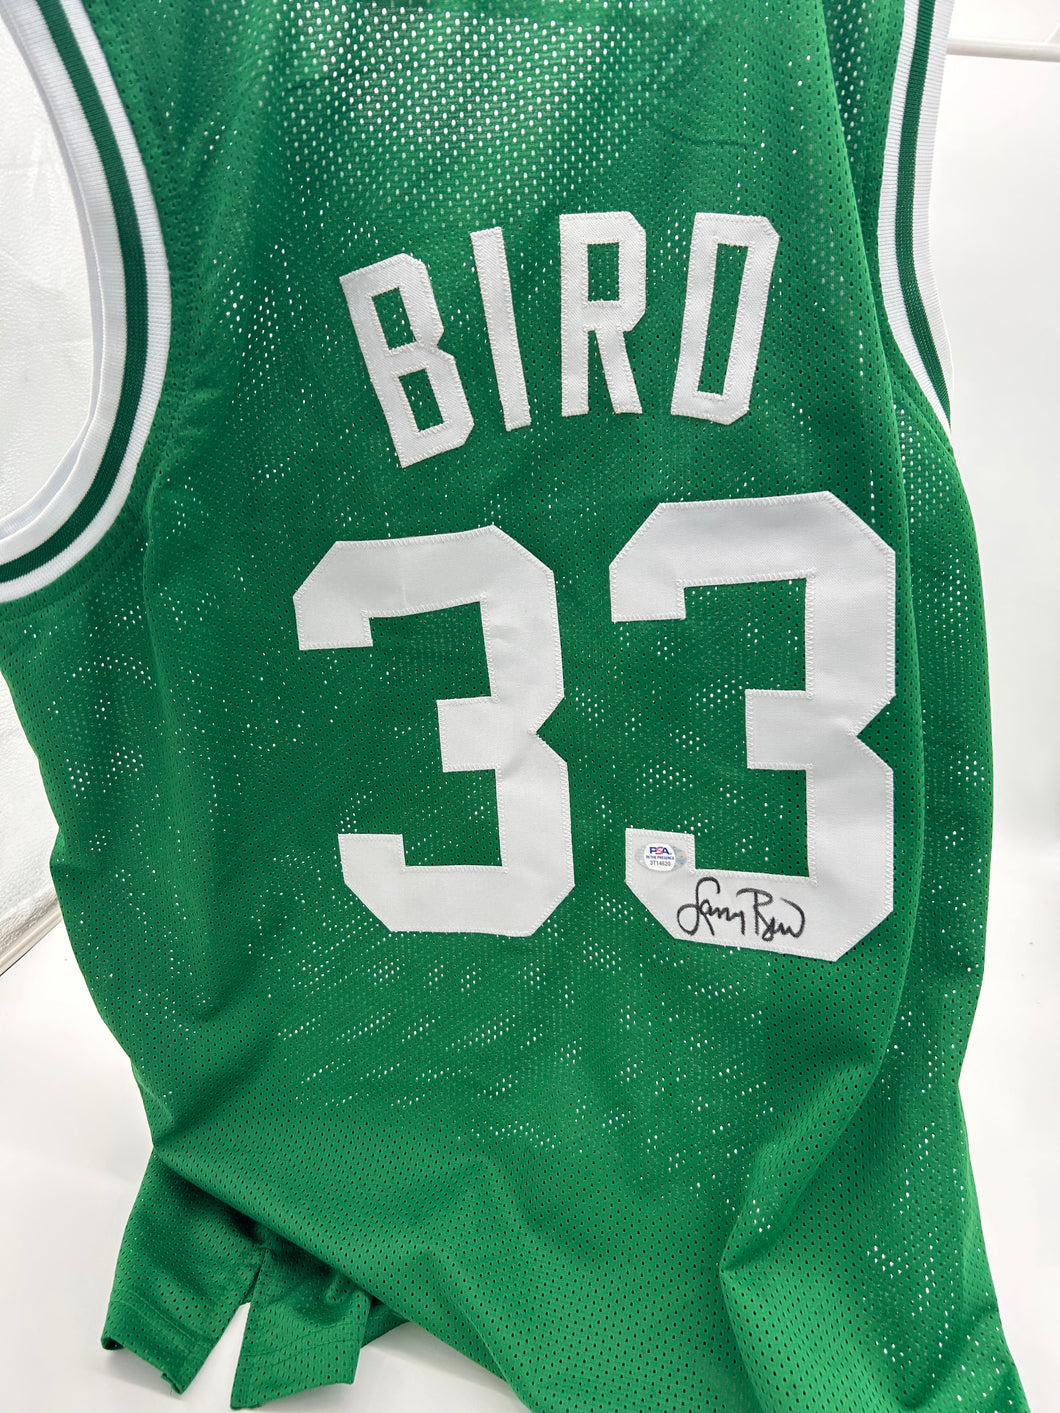 Larry Bird signed custom jersey